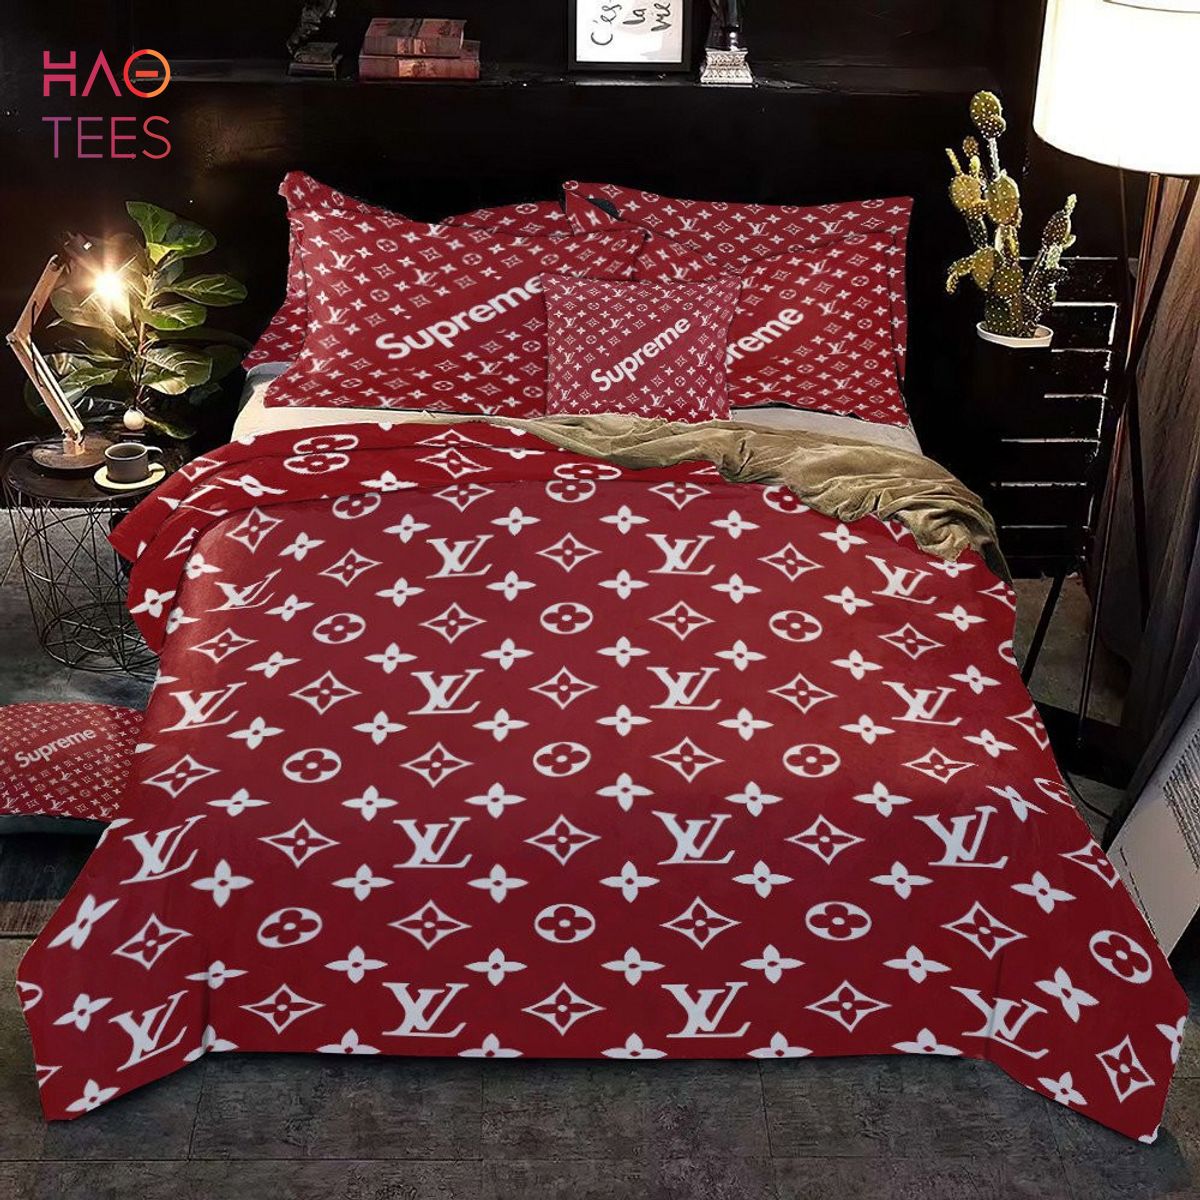 HOT Supreme LV Red Bedding Sets All Over Printed